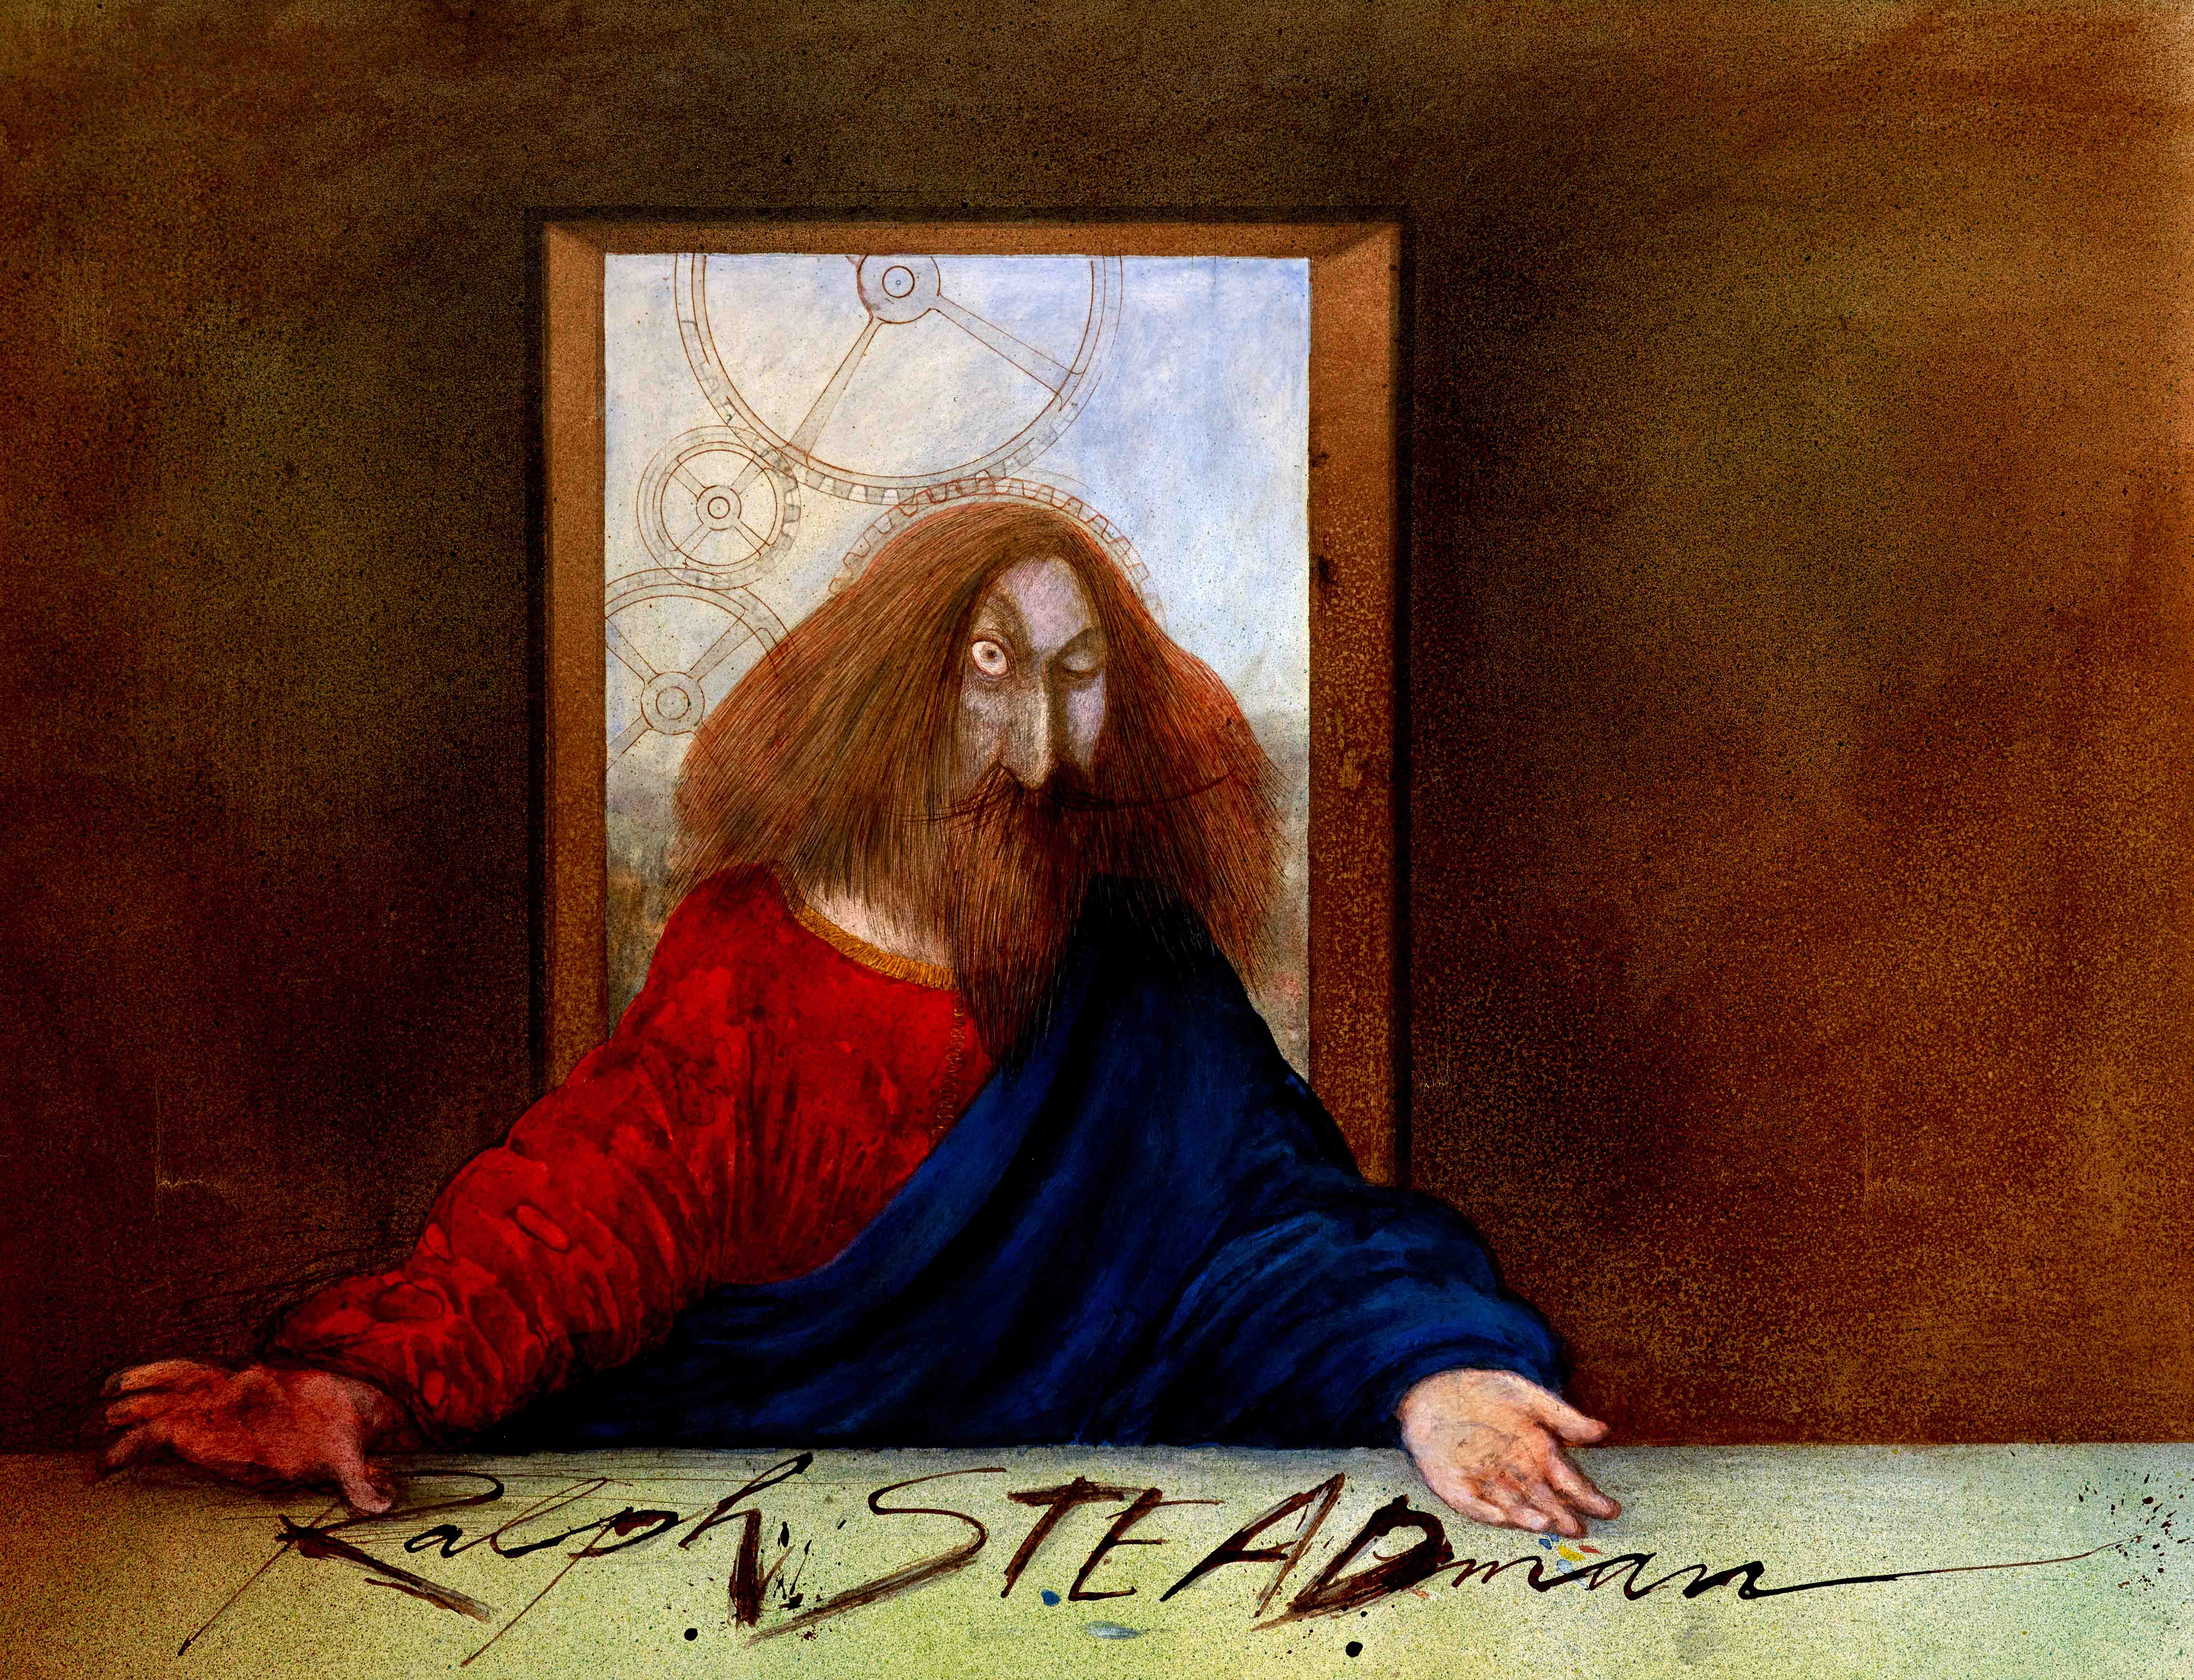 Portrait of Leonardo da Vinci by Ralph Steadman used for the cover of the book, I Leonardo.